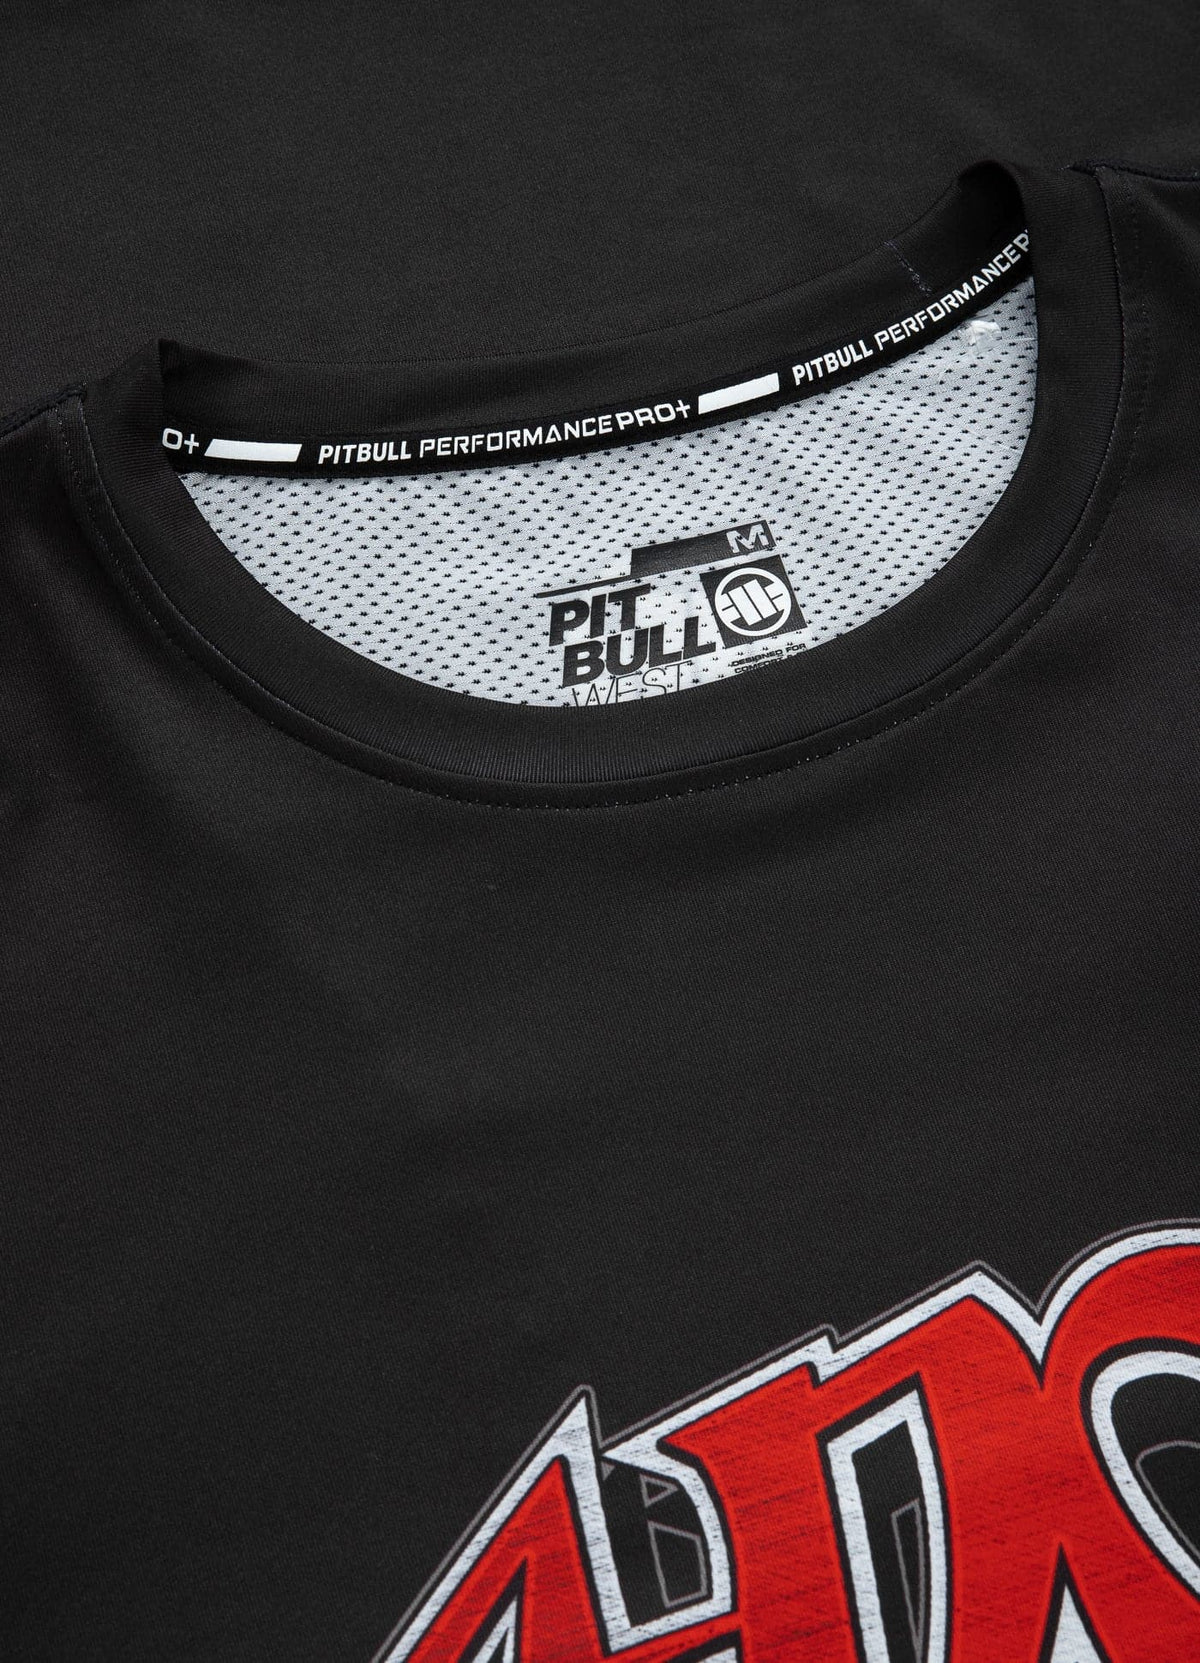 ADCC 2 Black Mesh Longsleeve T-shirt - Pitbull West Coast International Store 